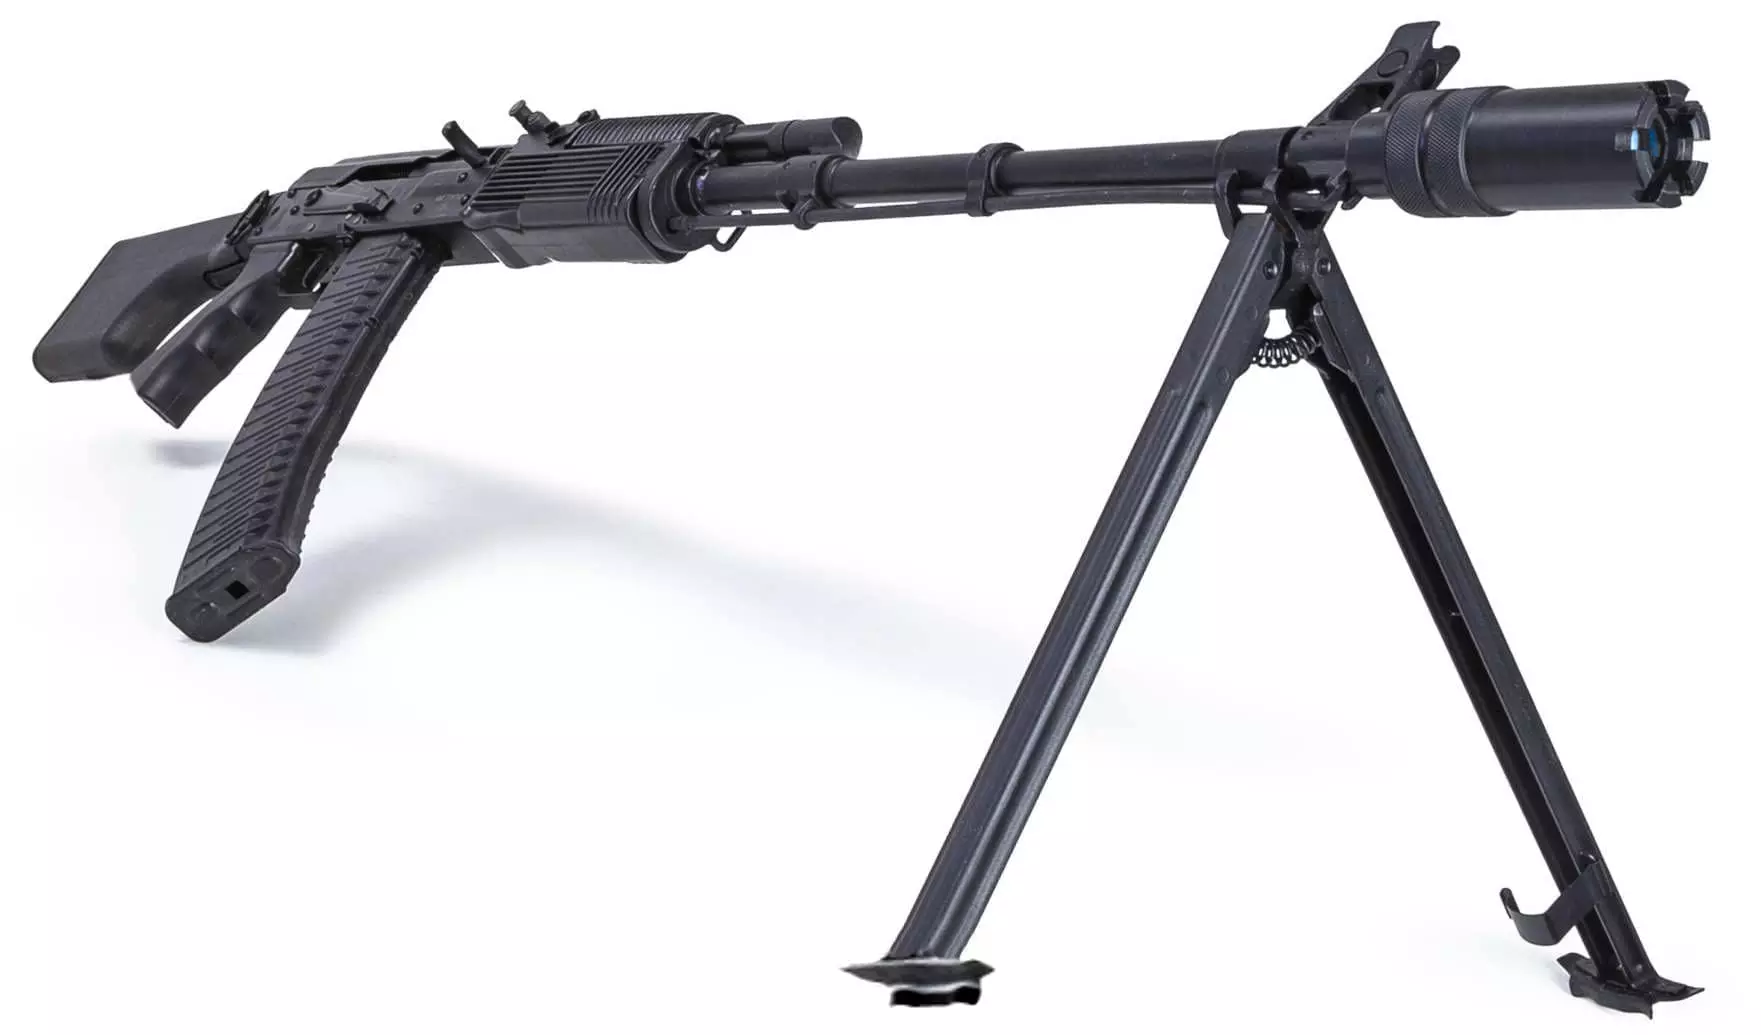 RPK 74 Kalashnikov machine gun lasertag with parallax